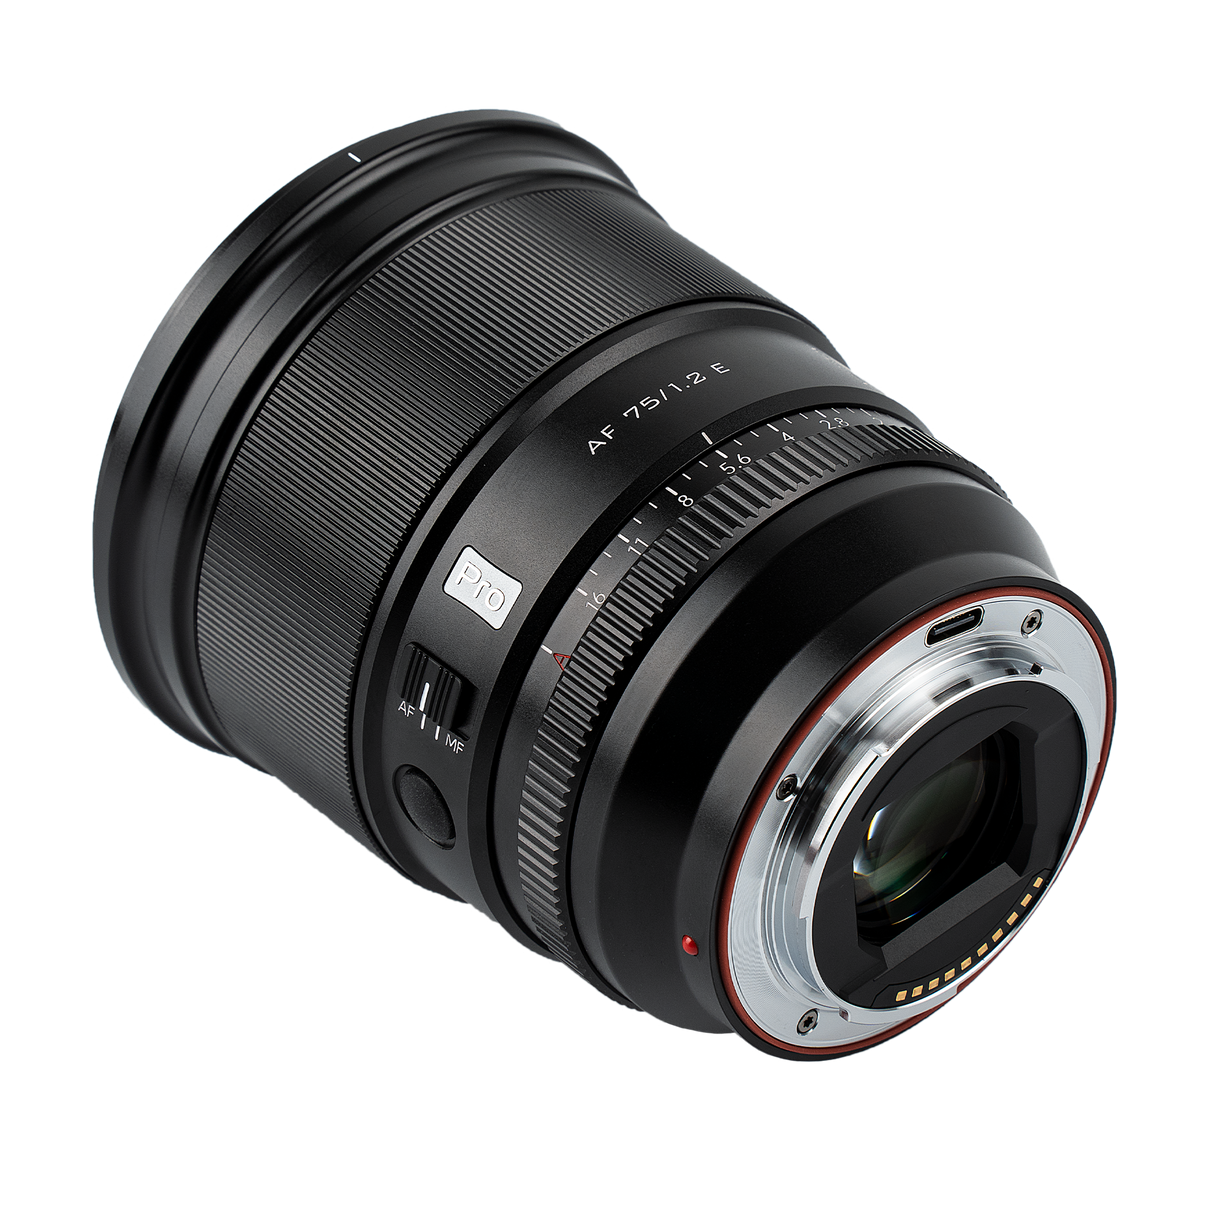 Lens AF 75mm F/1.2 Pro with Sony E mount